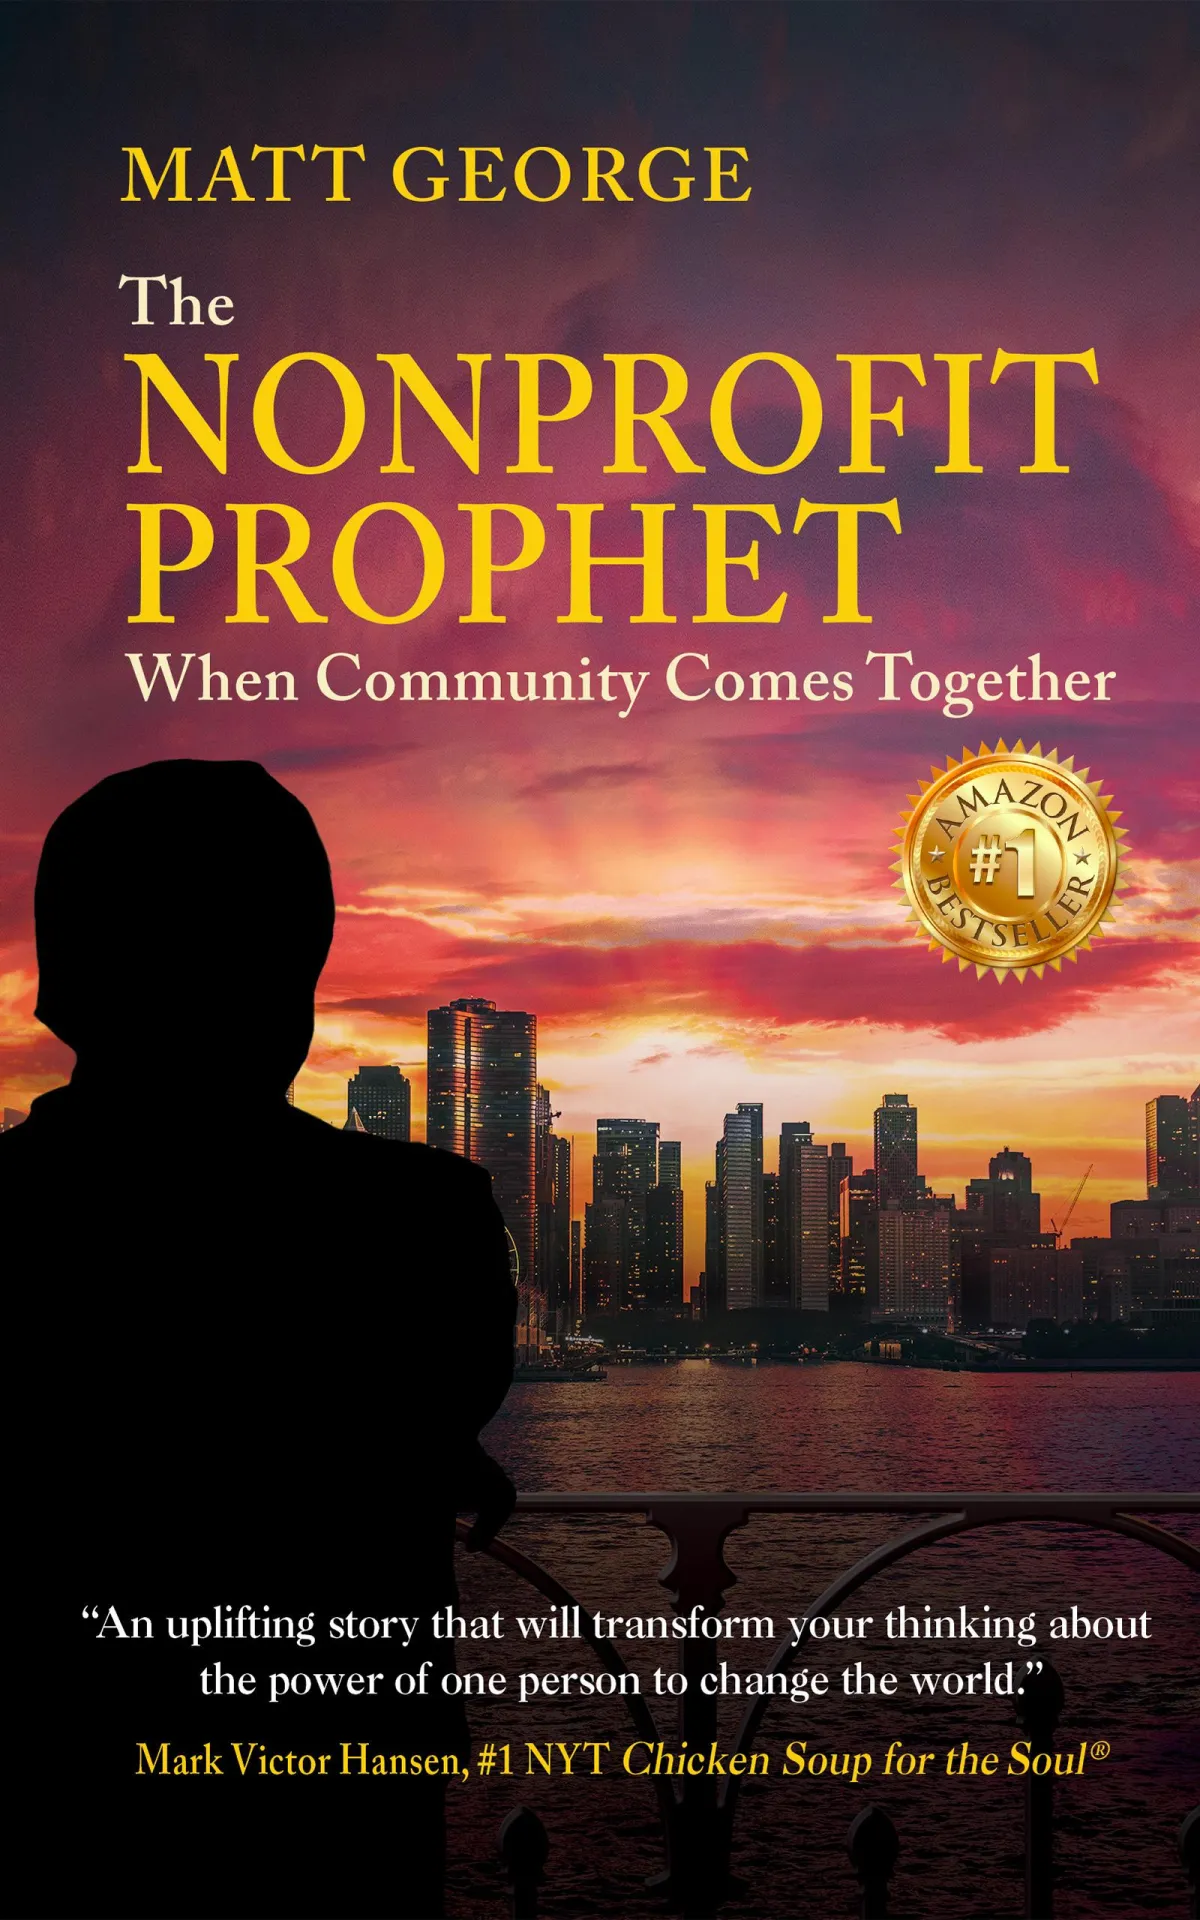 The Nonprofit Prophet by Matt George